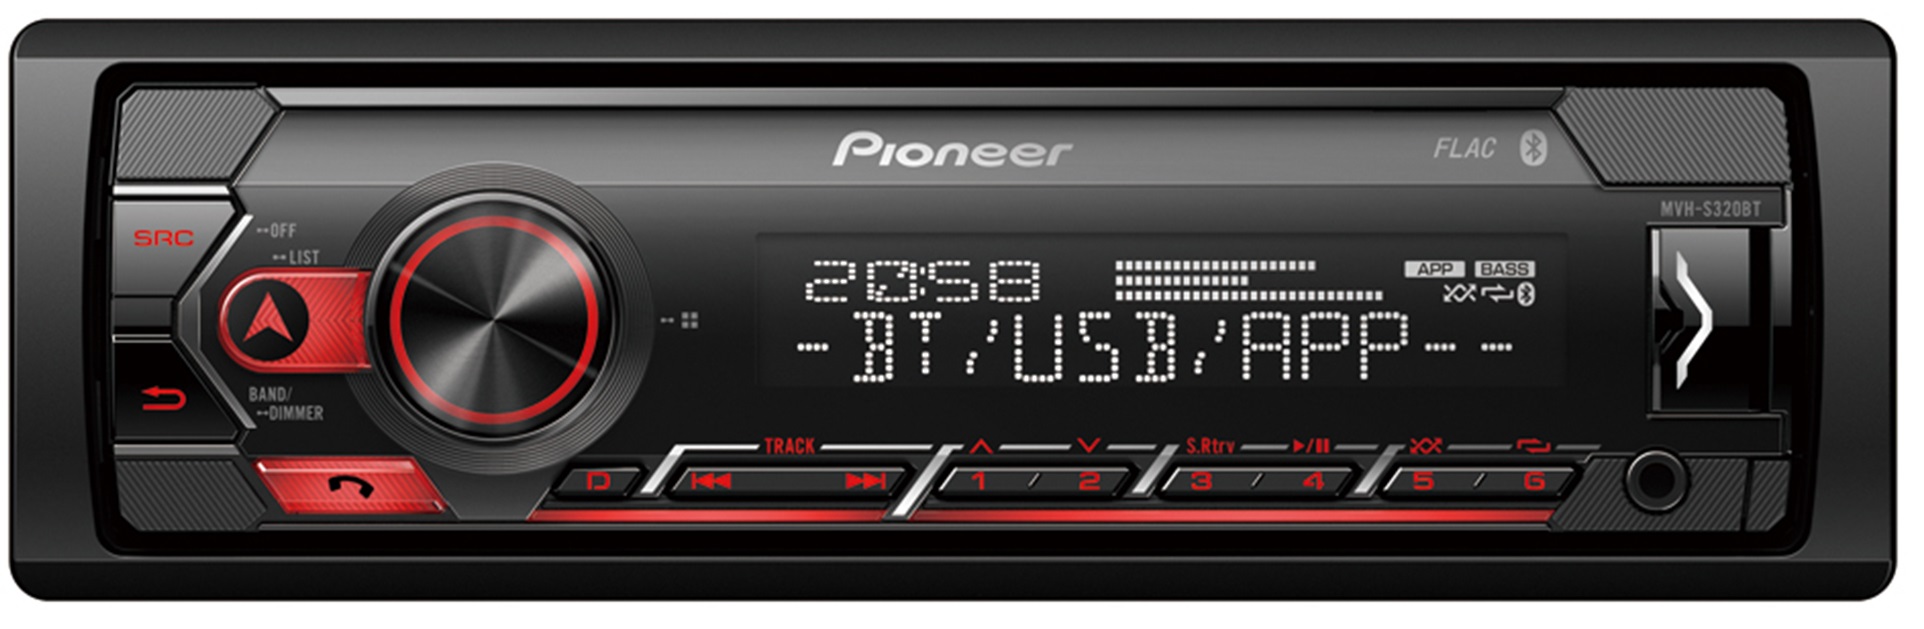 Billede af Pioneer MVH-S320BT Bilradio m. Bluetooth/Trådløs Telefoni